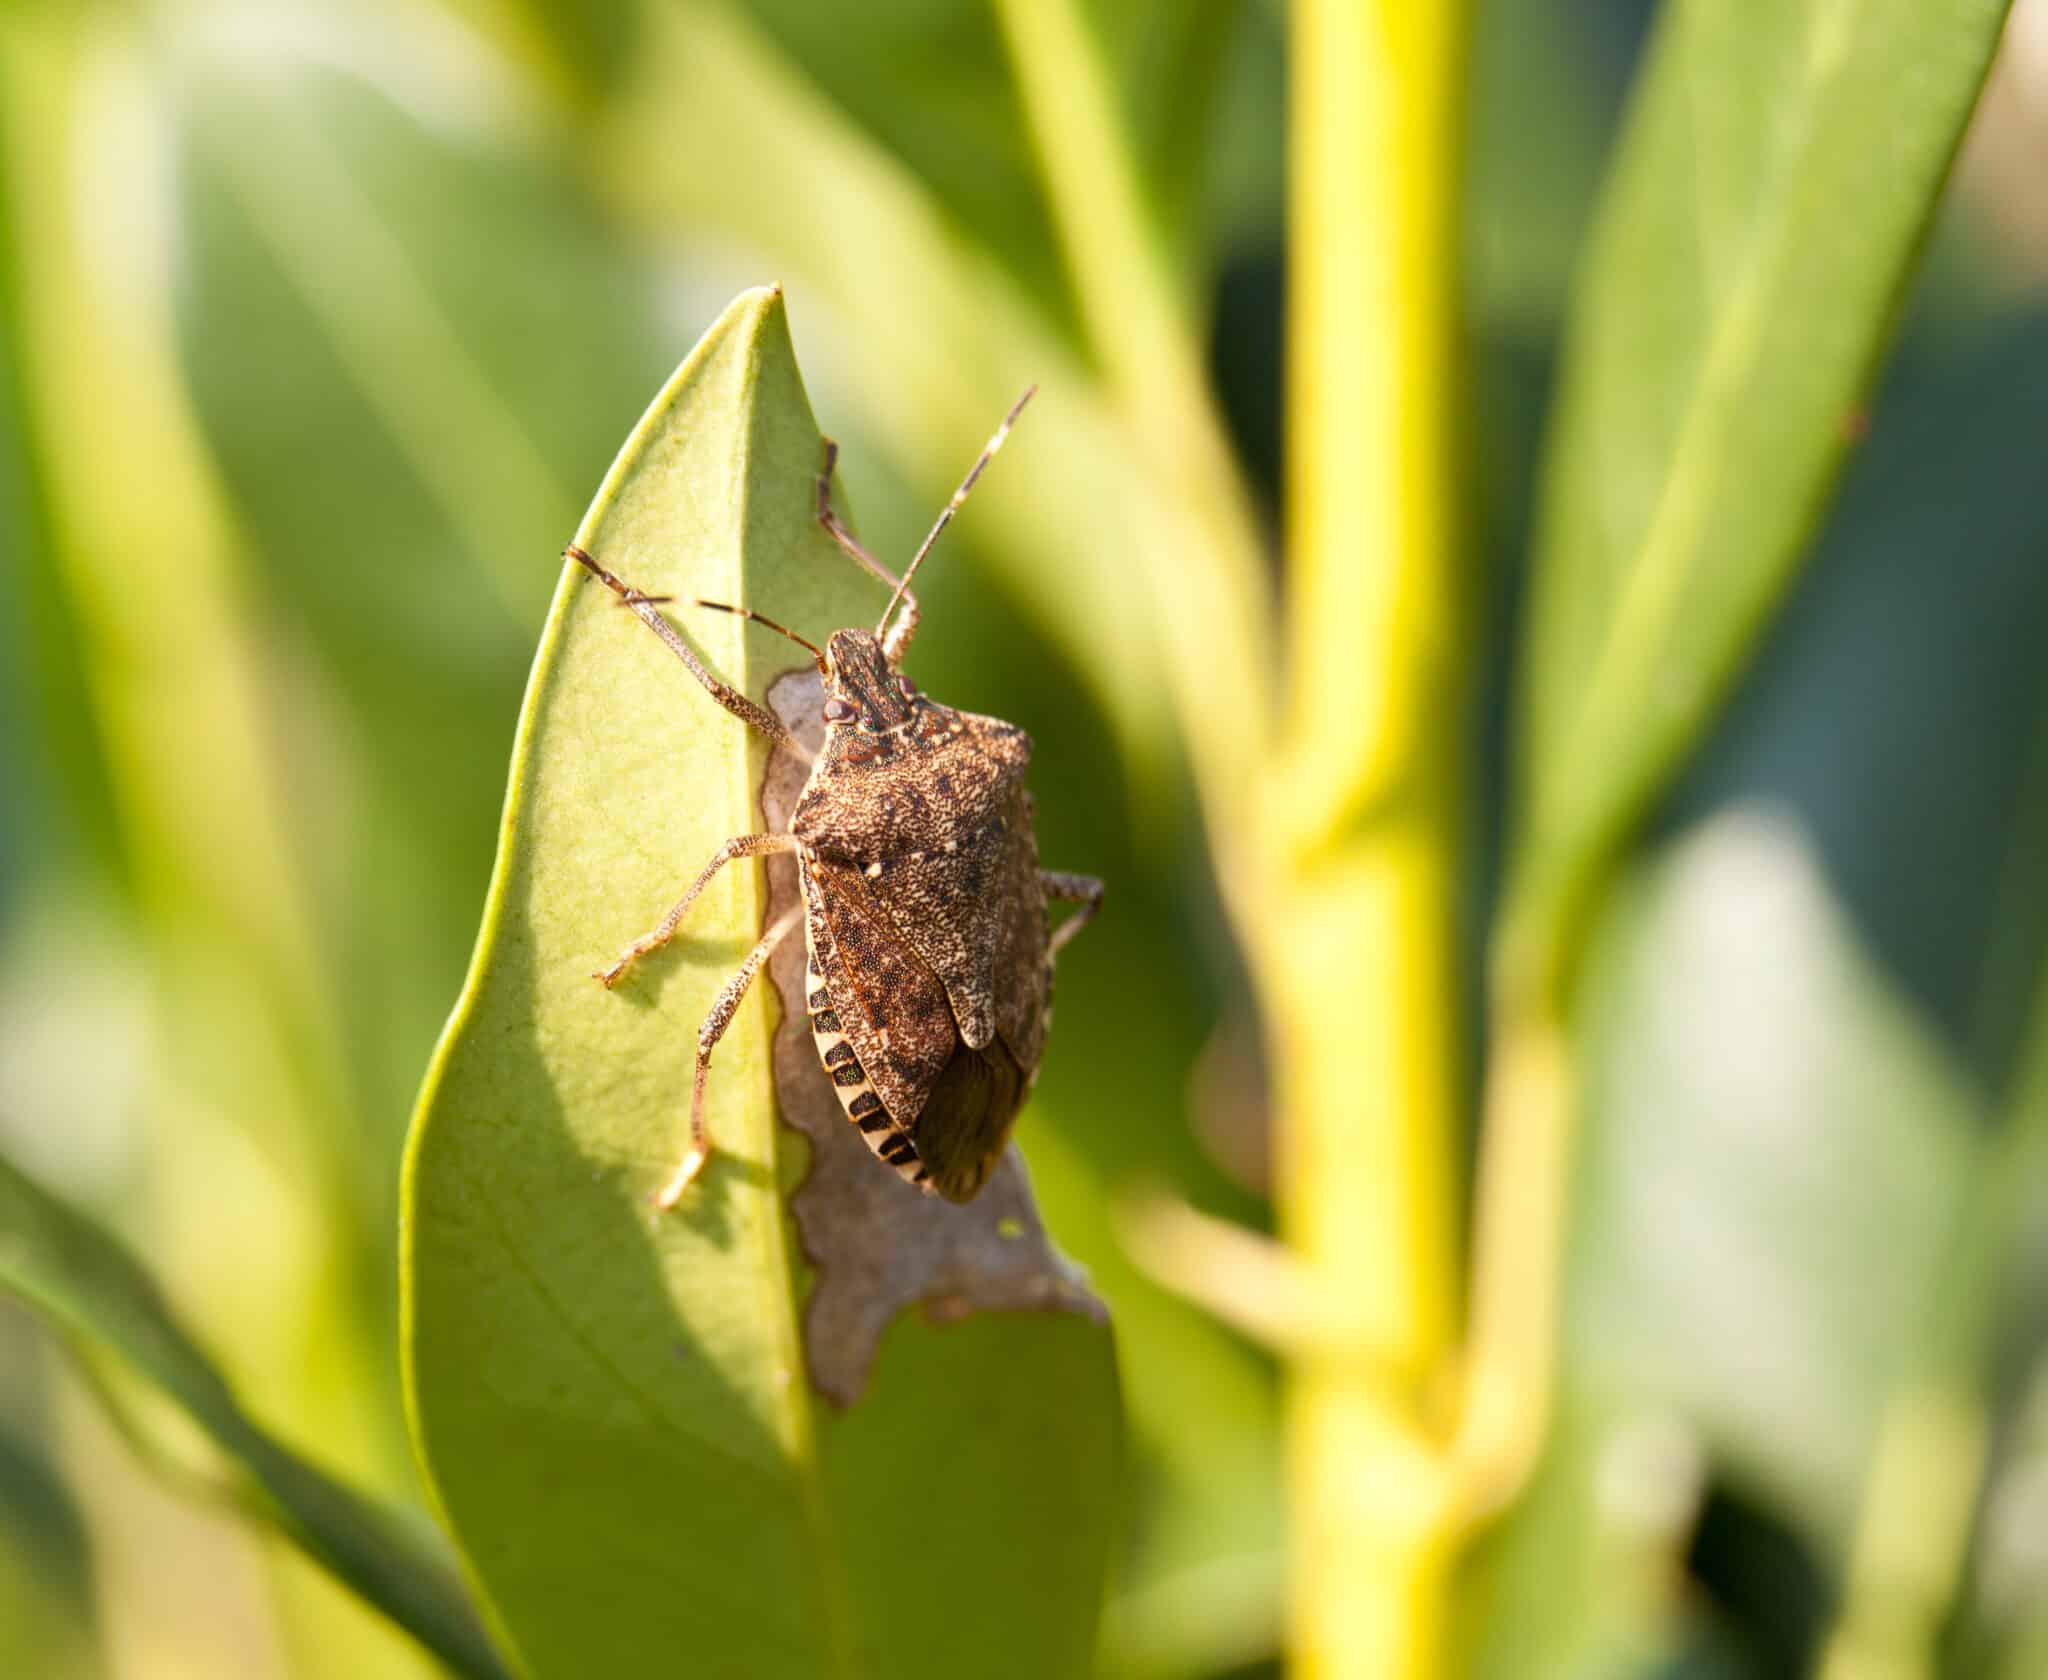 A Brown marmorated stink bug on a leaf